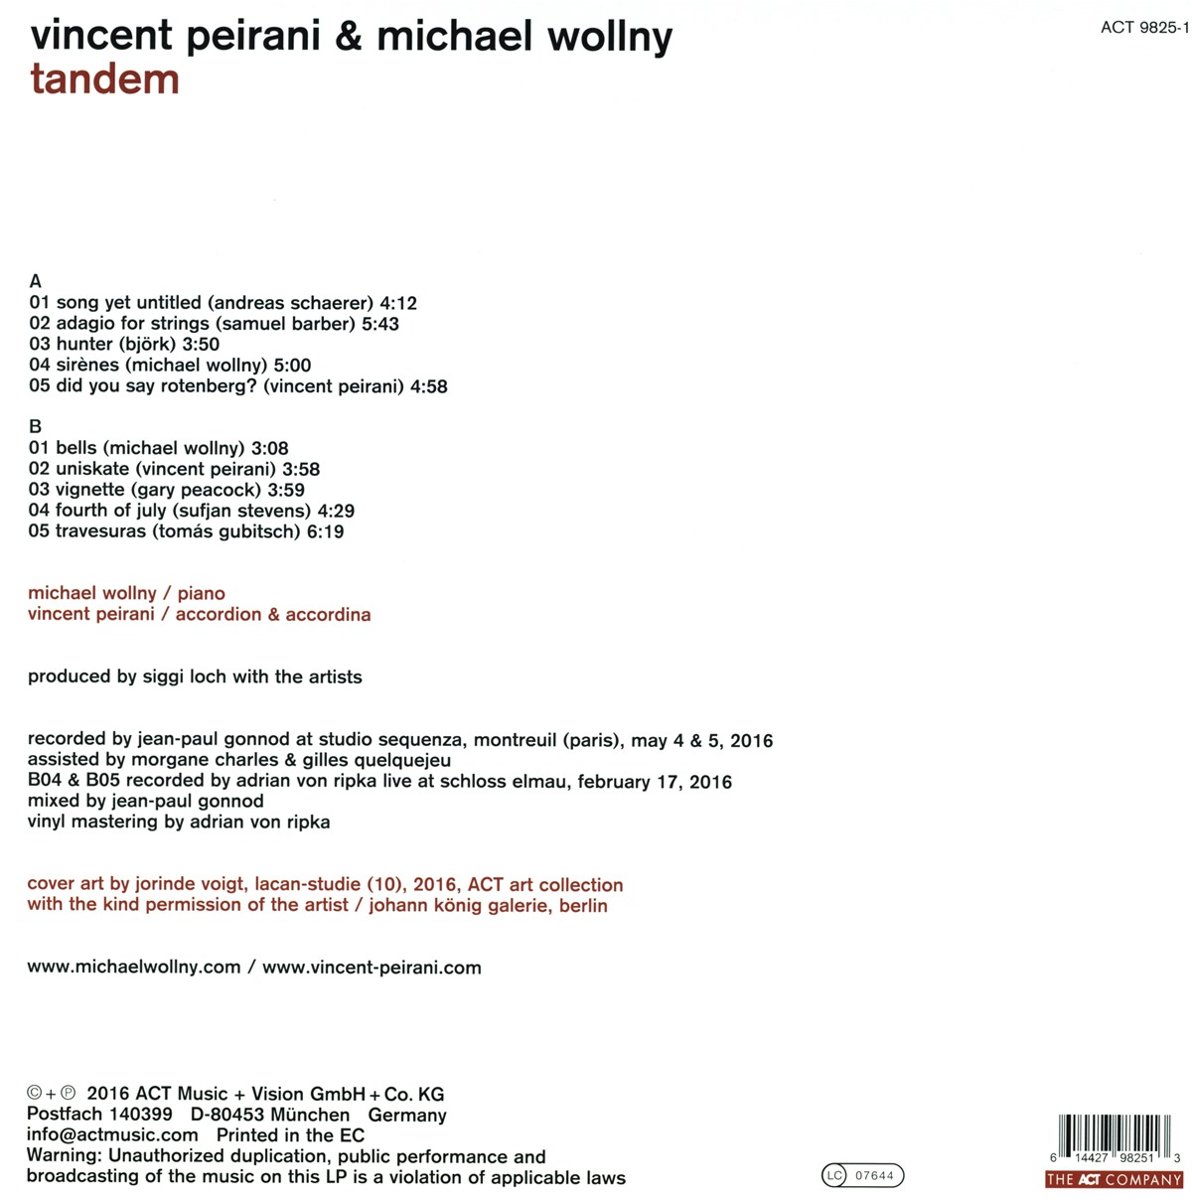 Michael Wollny & Vincent Peirani (미카엘 울니, 뱅상 빼라니) - Tandem (탠덤) [LP]